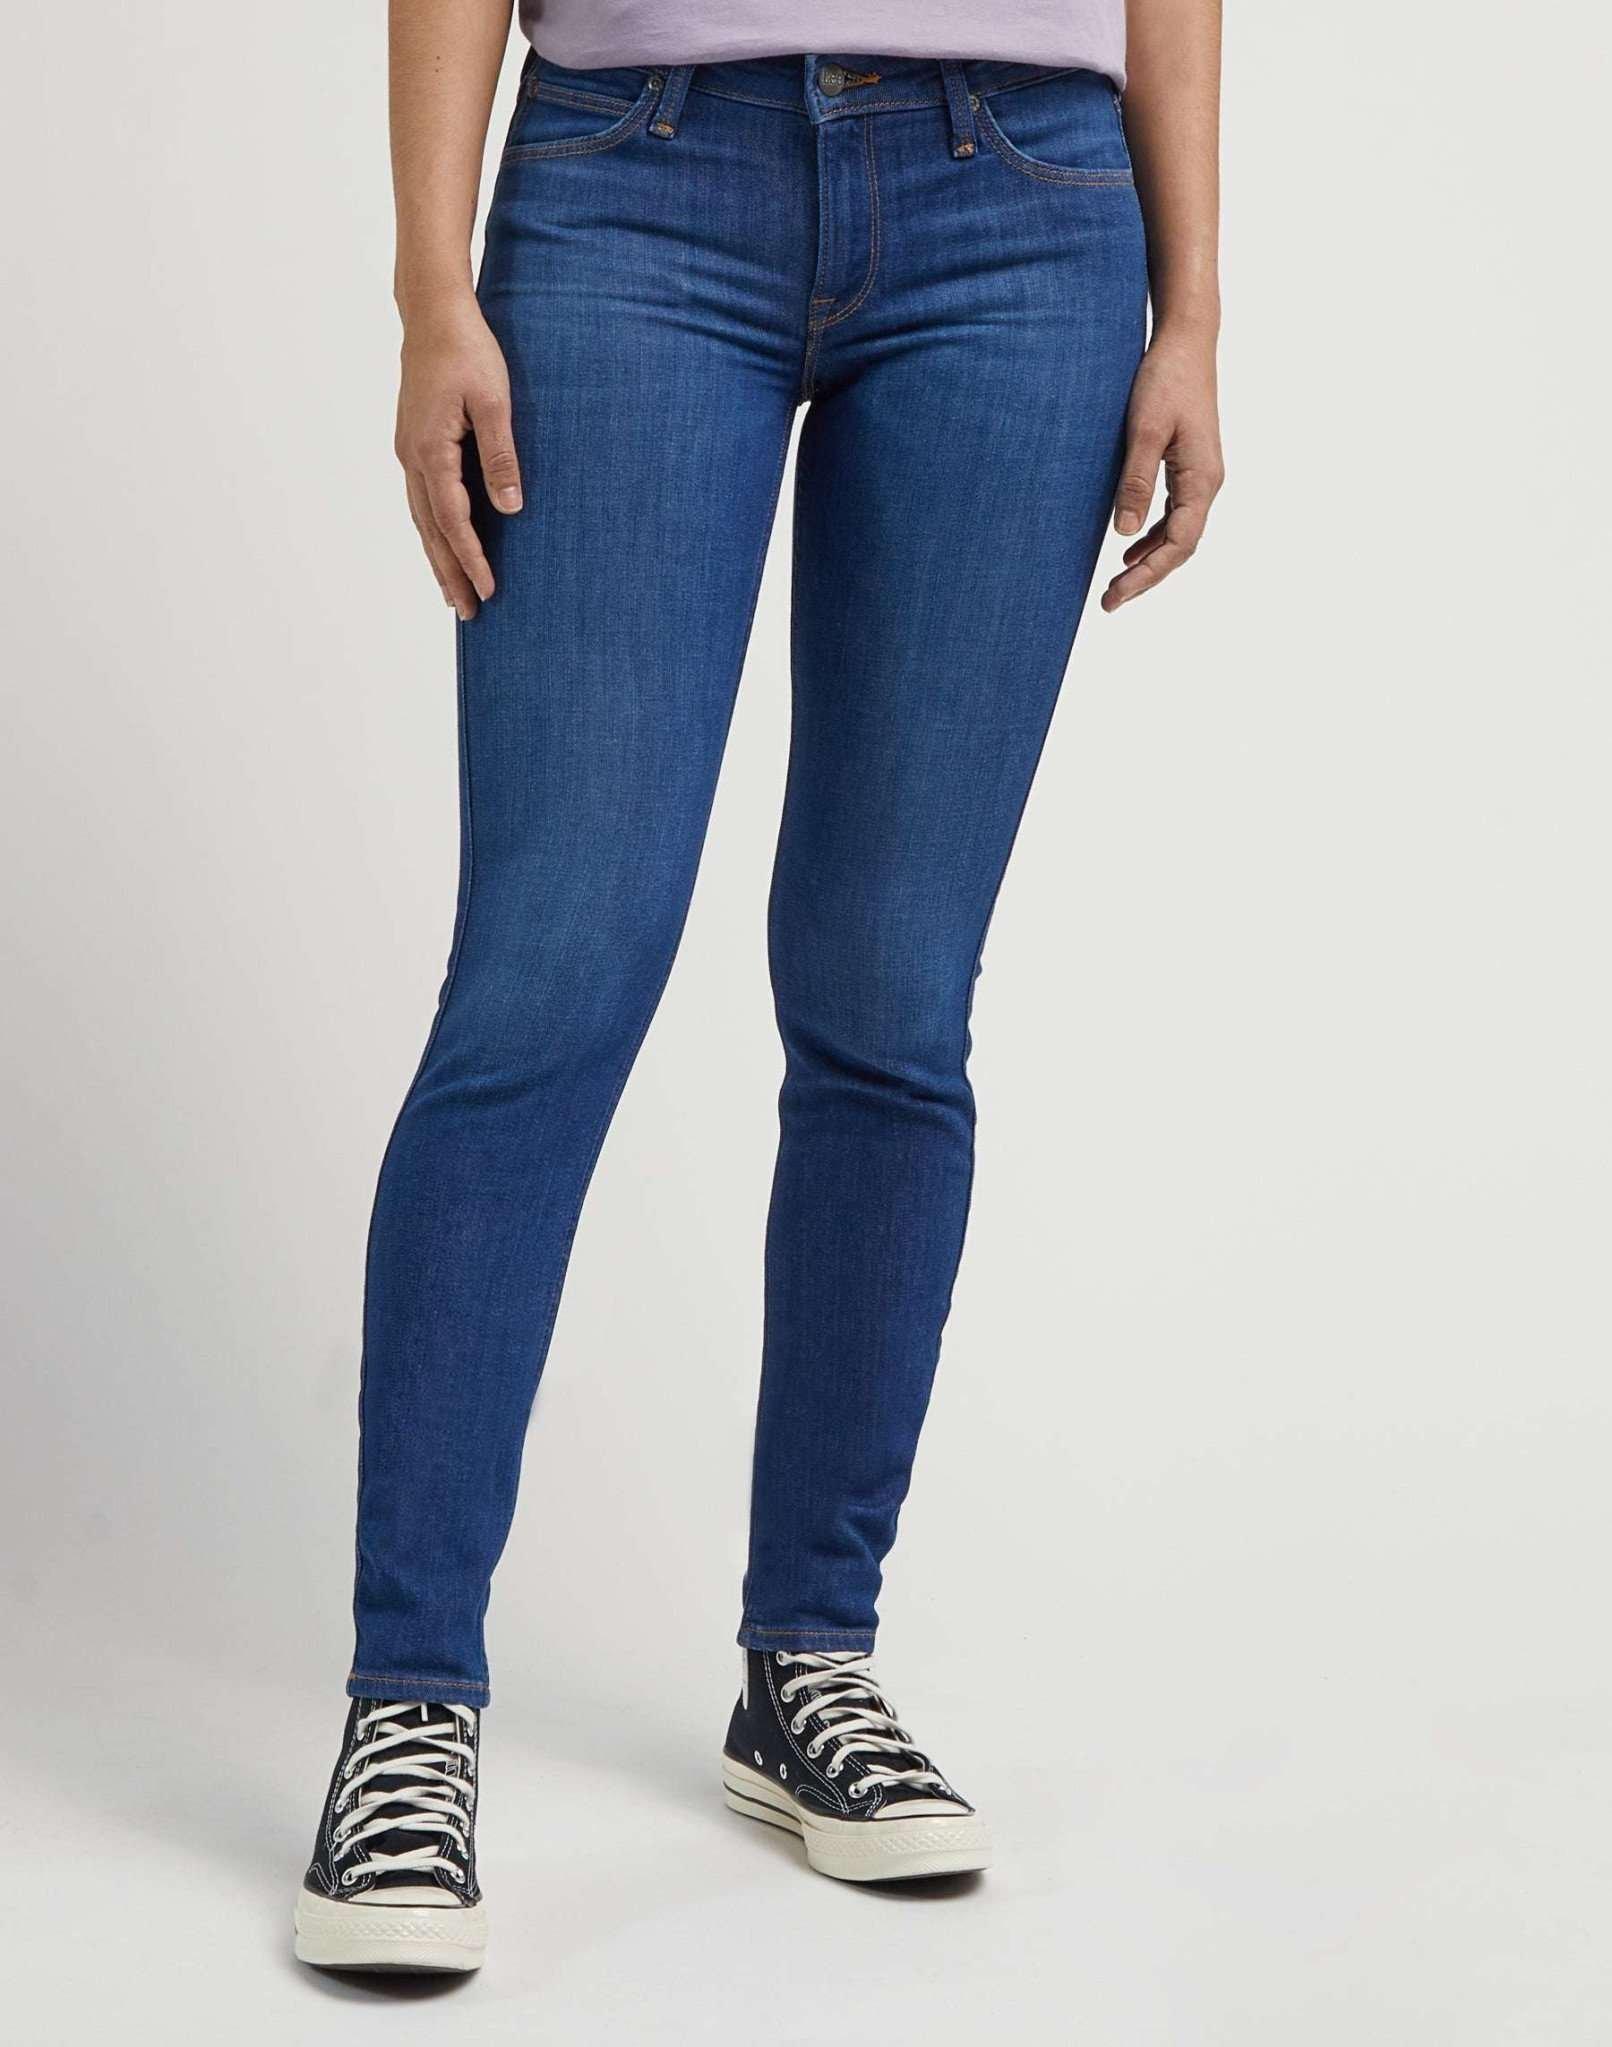 Jeans Skinny Fit Scarlett Damen Blau L31/W25 von Lee